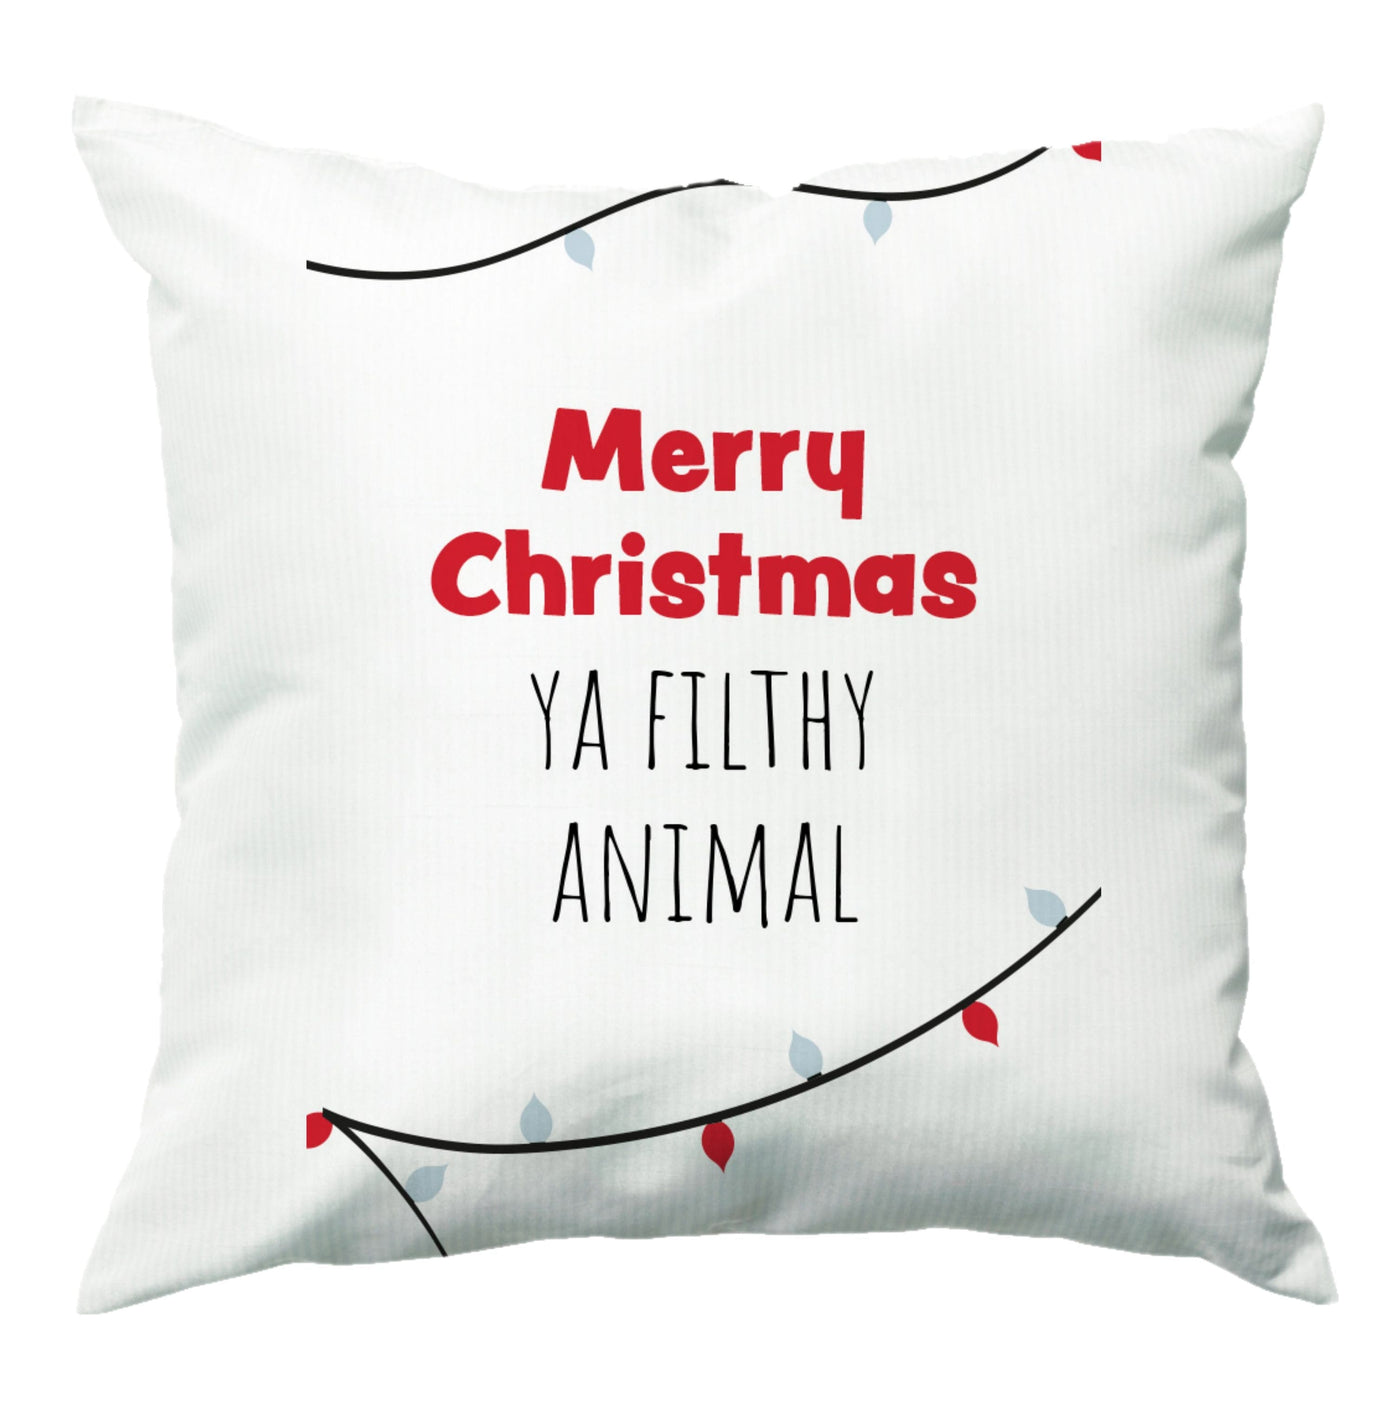 Merry Christmas Ya Filthy Animal - Home Alone Cushion